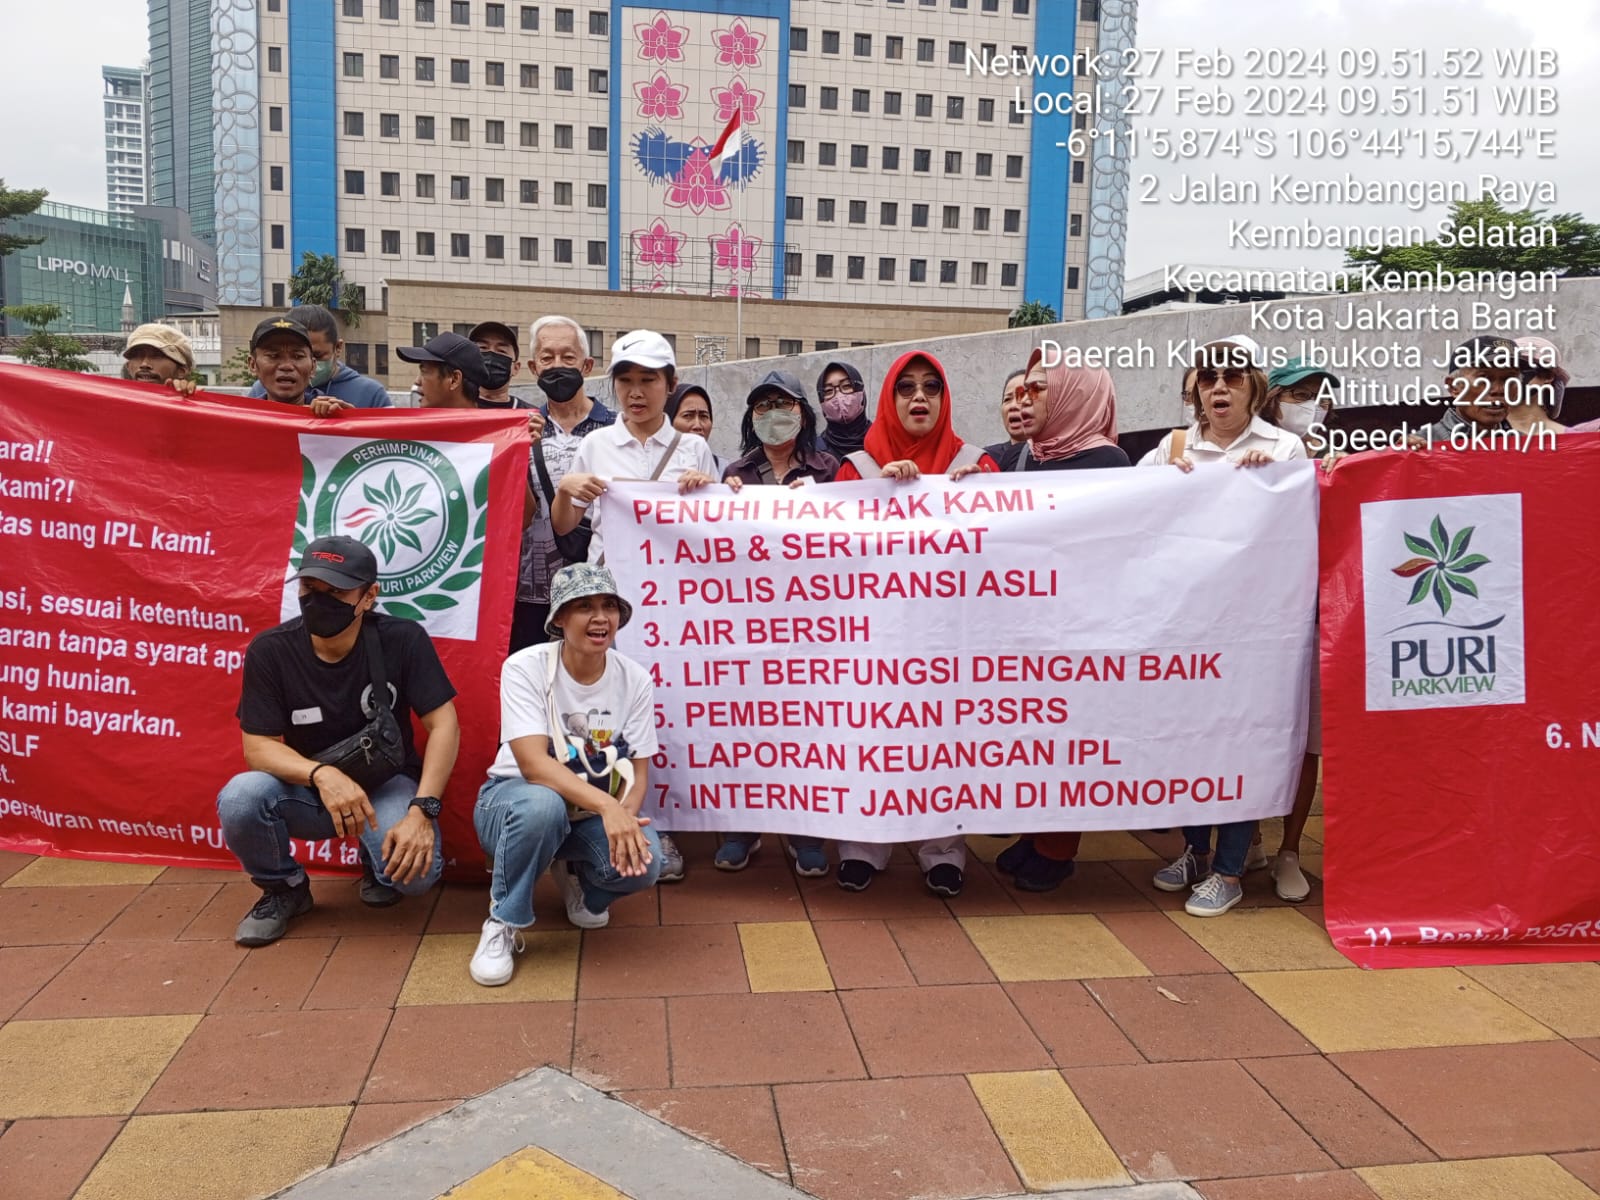 Kabar Terbaru Asuransi Puri Park View: Warga Jakarta Barat Bergerak Bersama